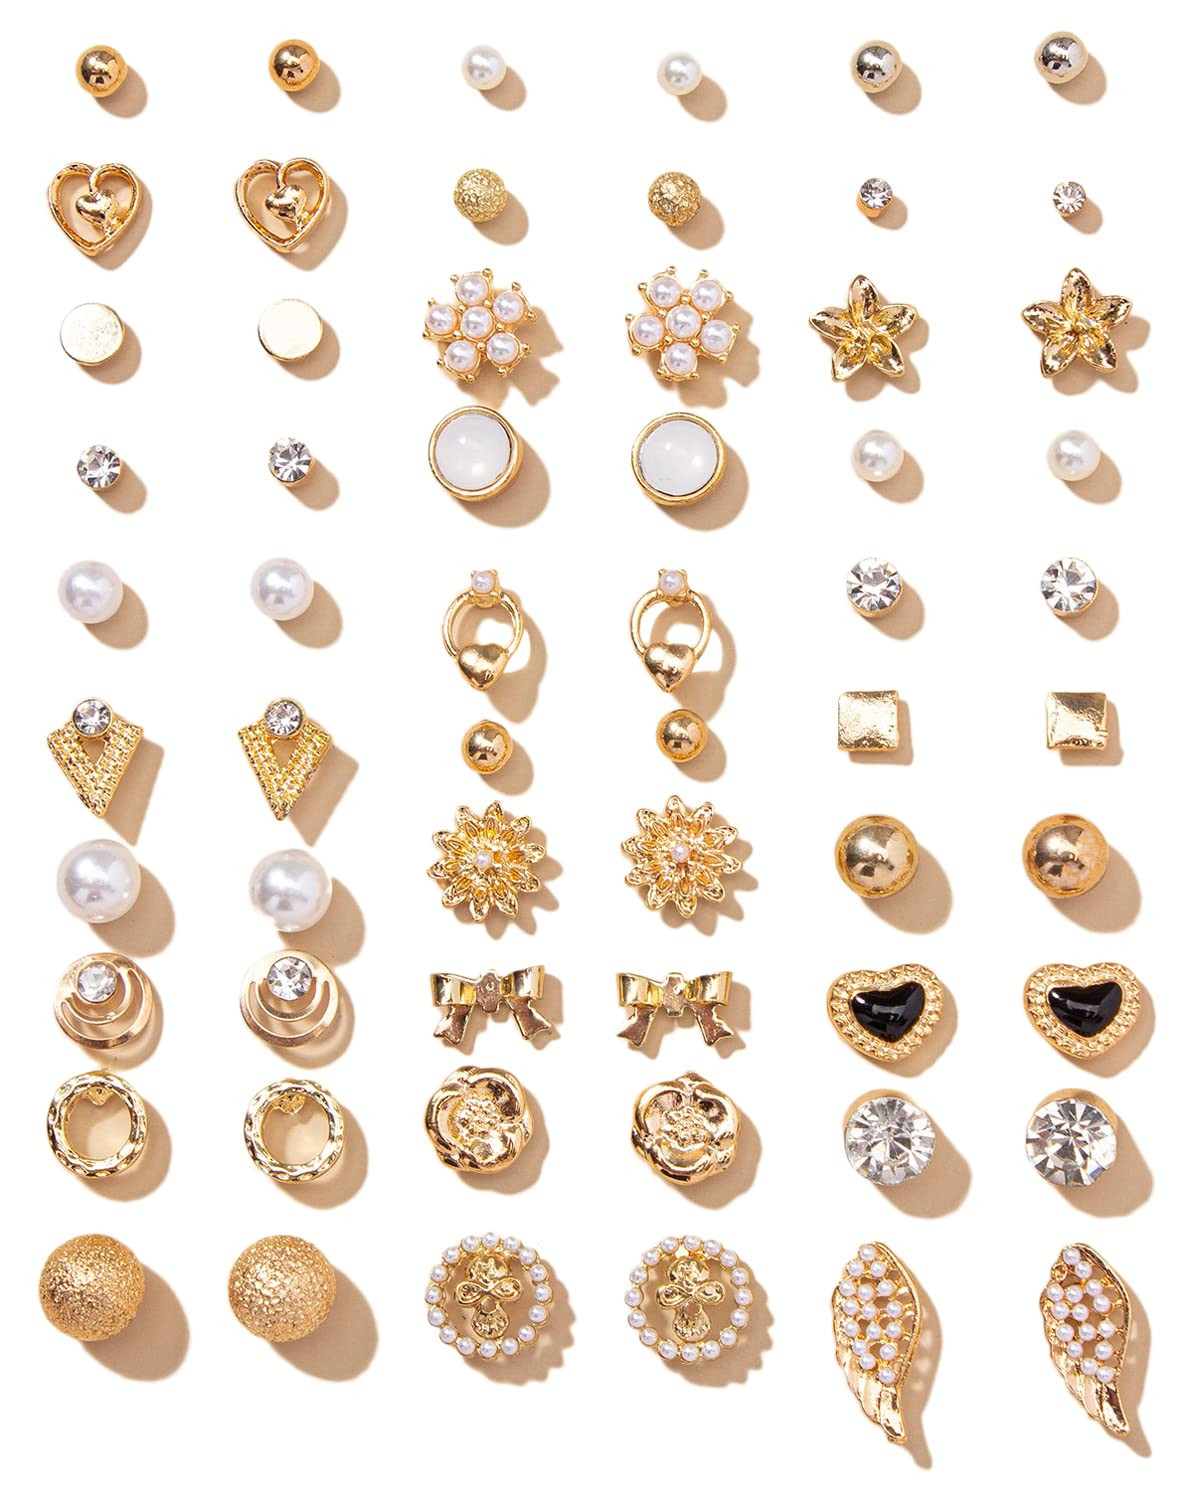 Silver Connected Threader Earrings Double Piercings Set 925 - Etsy |  Threader earrings, Earrings, Silver threader earrings